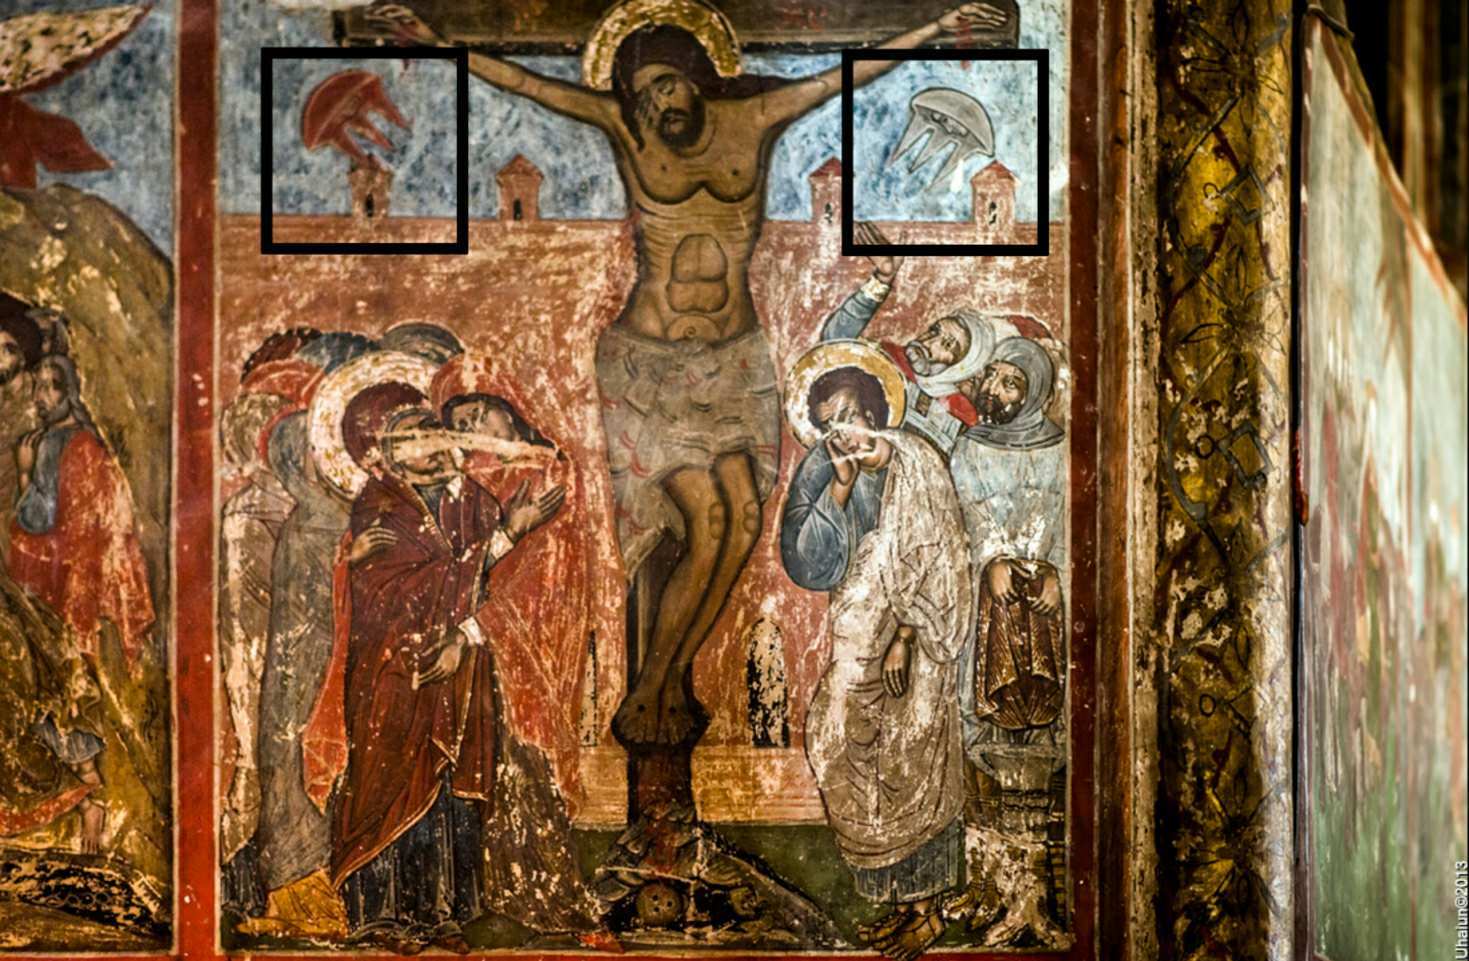 De kruisiging fresco van de Svetitskhoveli kathedraal, Mtskheta, Georgië